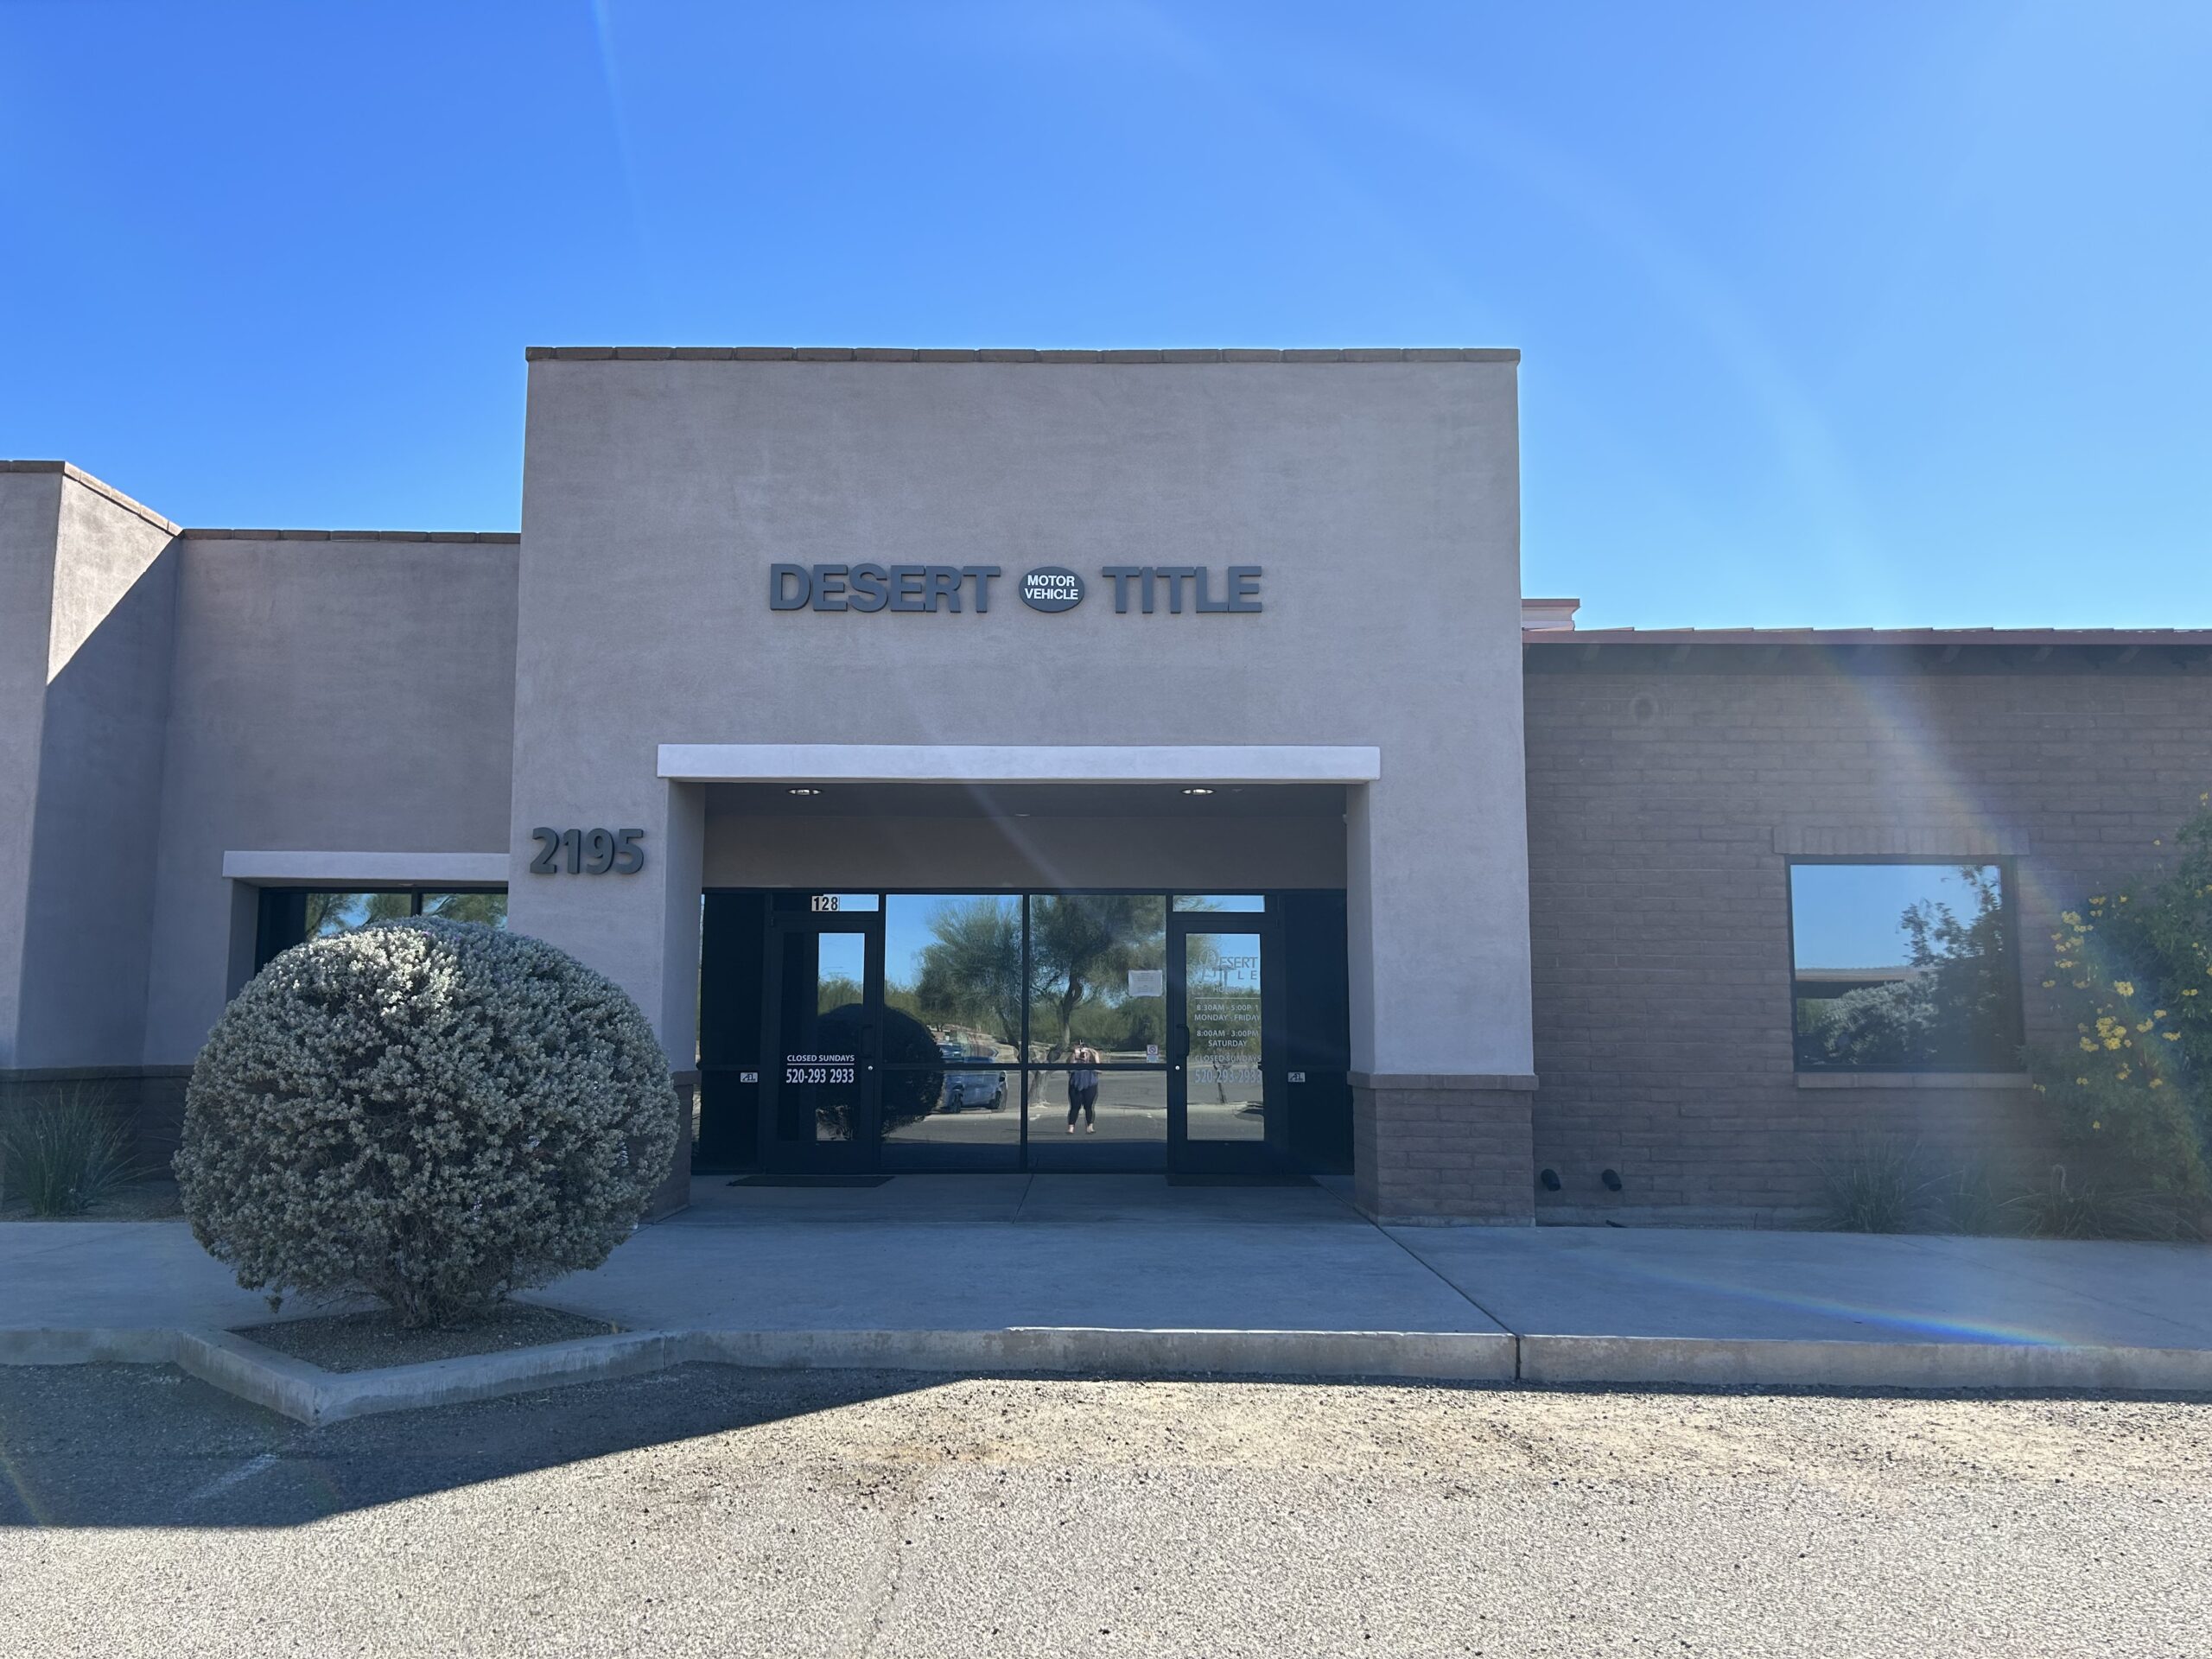 Desert Title Tucson Motor Vehicle Department Services